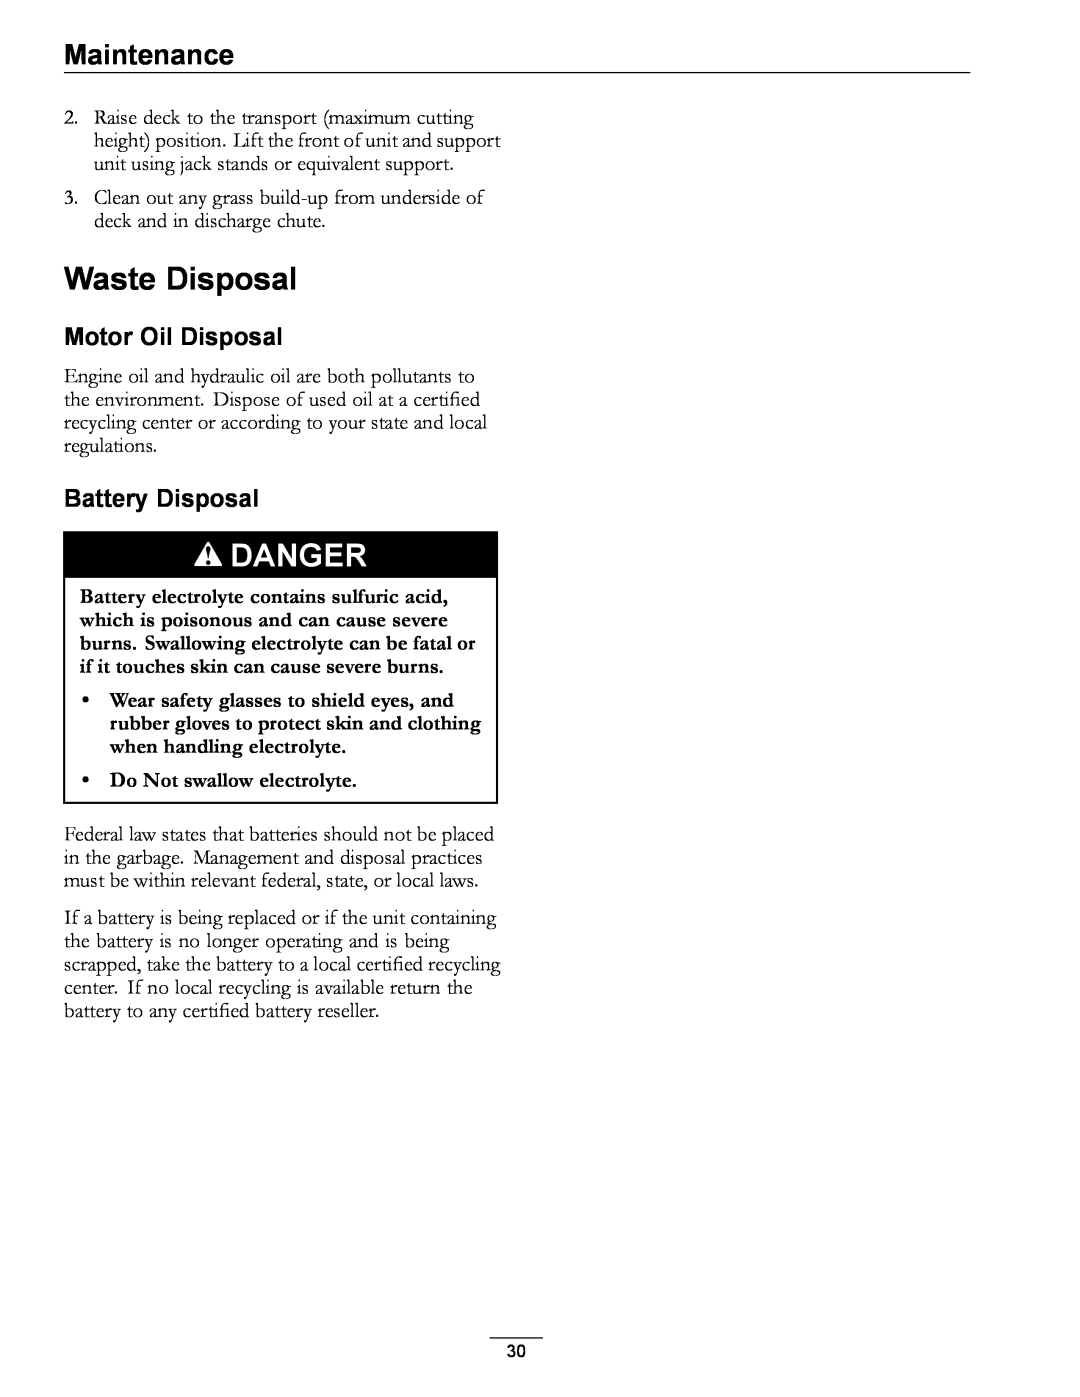 Exmark Phazer manual Waste Disposal, Motor Oil Disposal, Battery Disposal, Do Not swallow electrolyte, Danger, Maintenance 